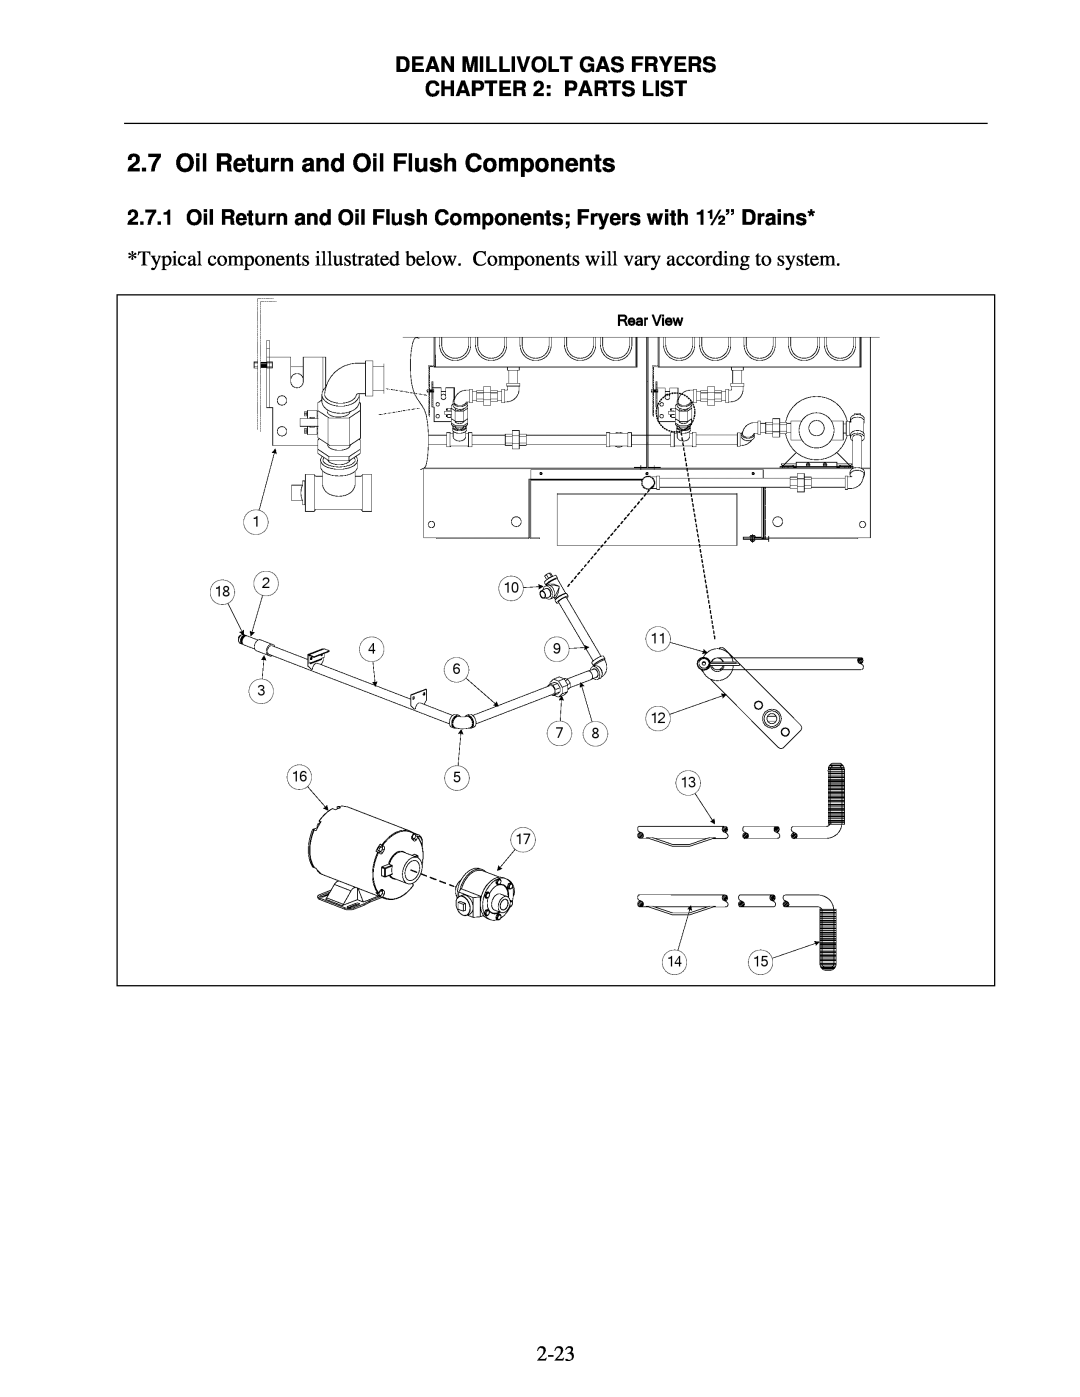 Frymaster Super Runner Series manual Oil Return and Oil Flush Components, Dean Millivolt Gas Fryers : Parts List, Rear View 